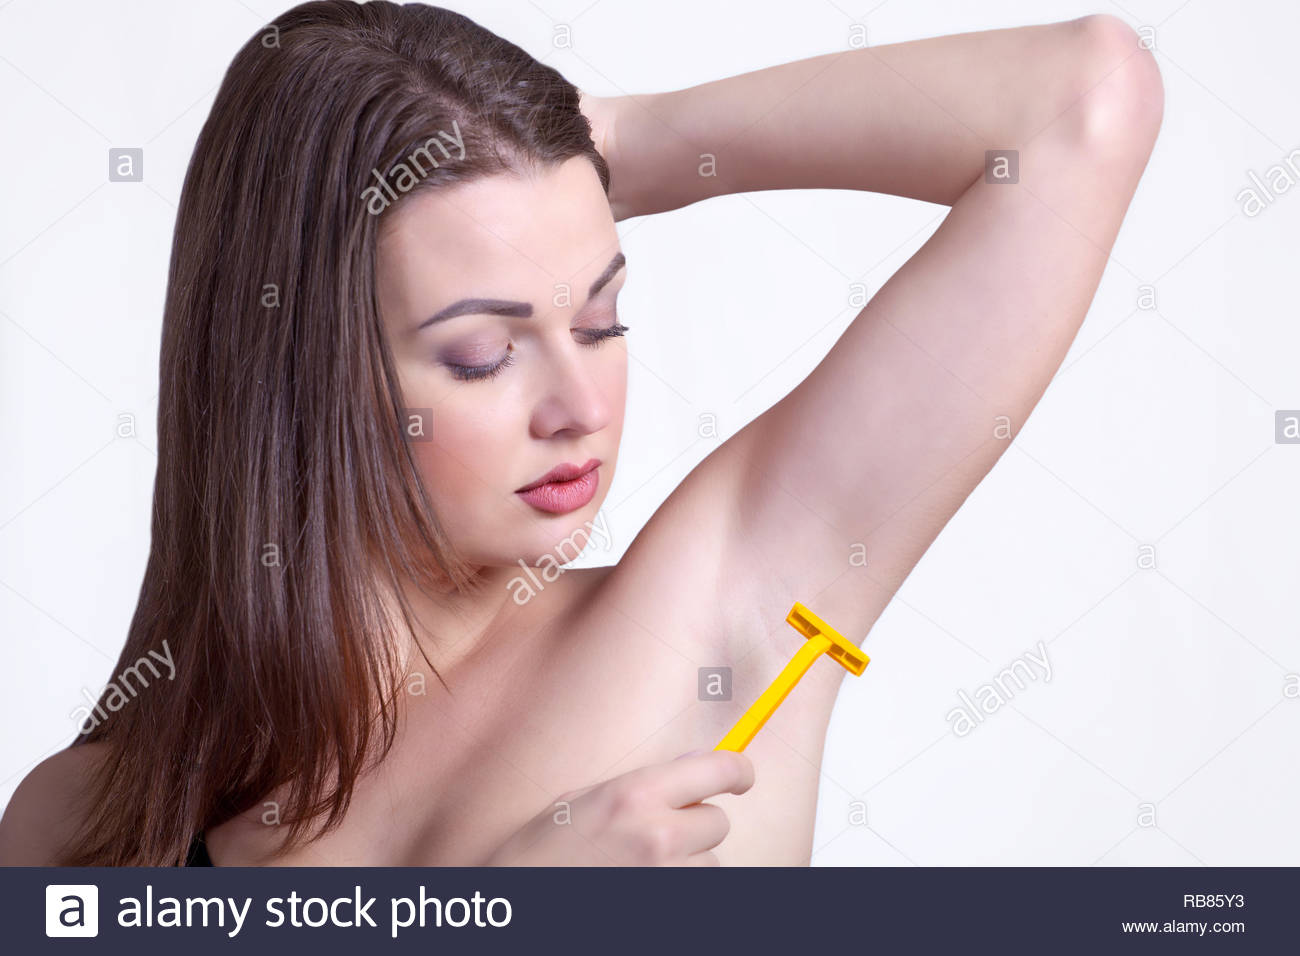 Girl armpit shave, epilation or depilation, holding razor with ...